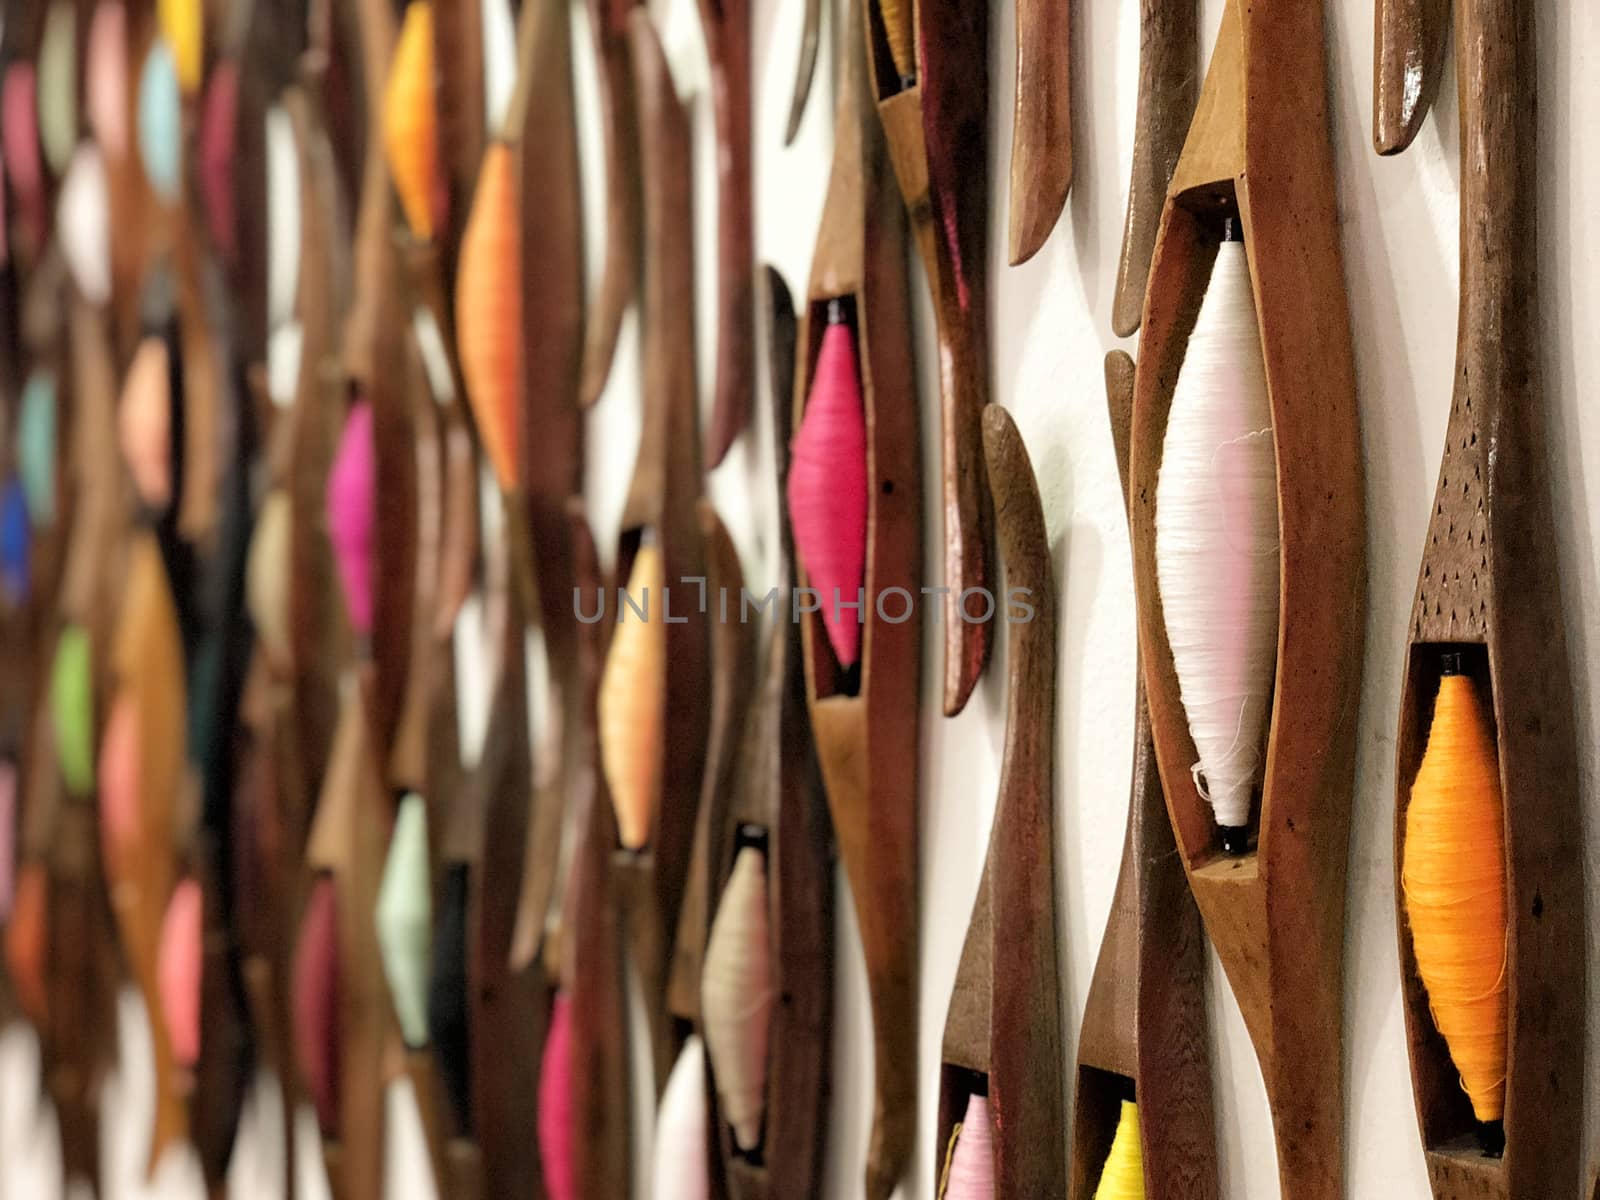 Thai handicraft wooden weaving shuttle for silk textile production